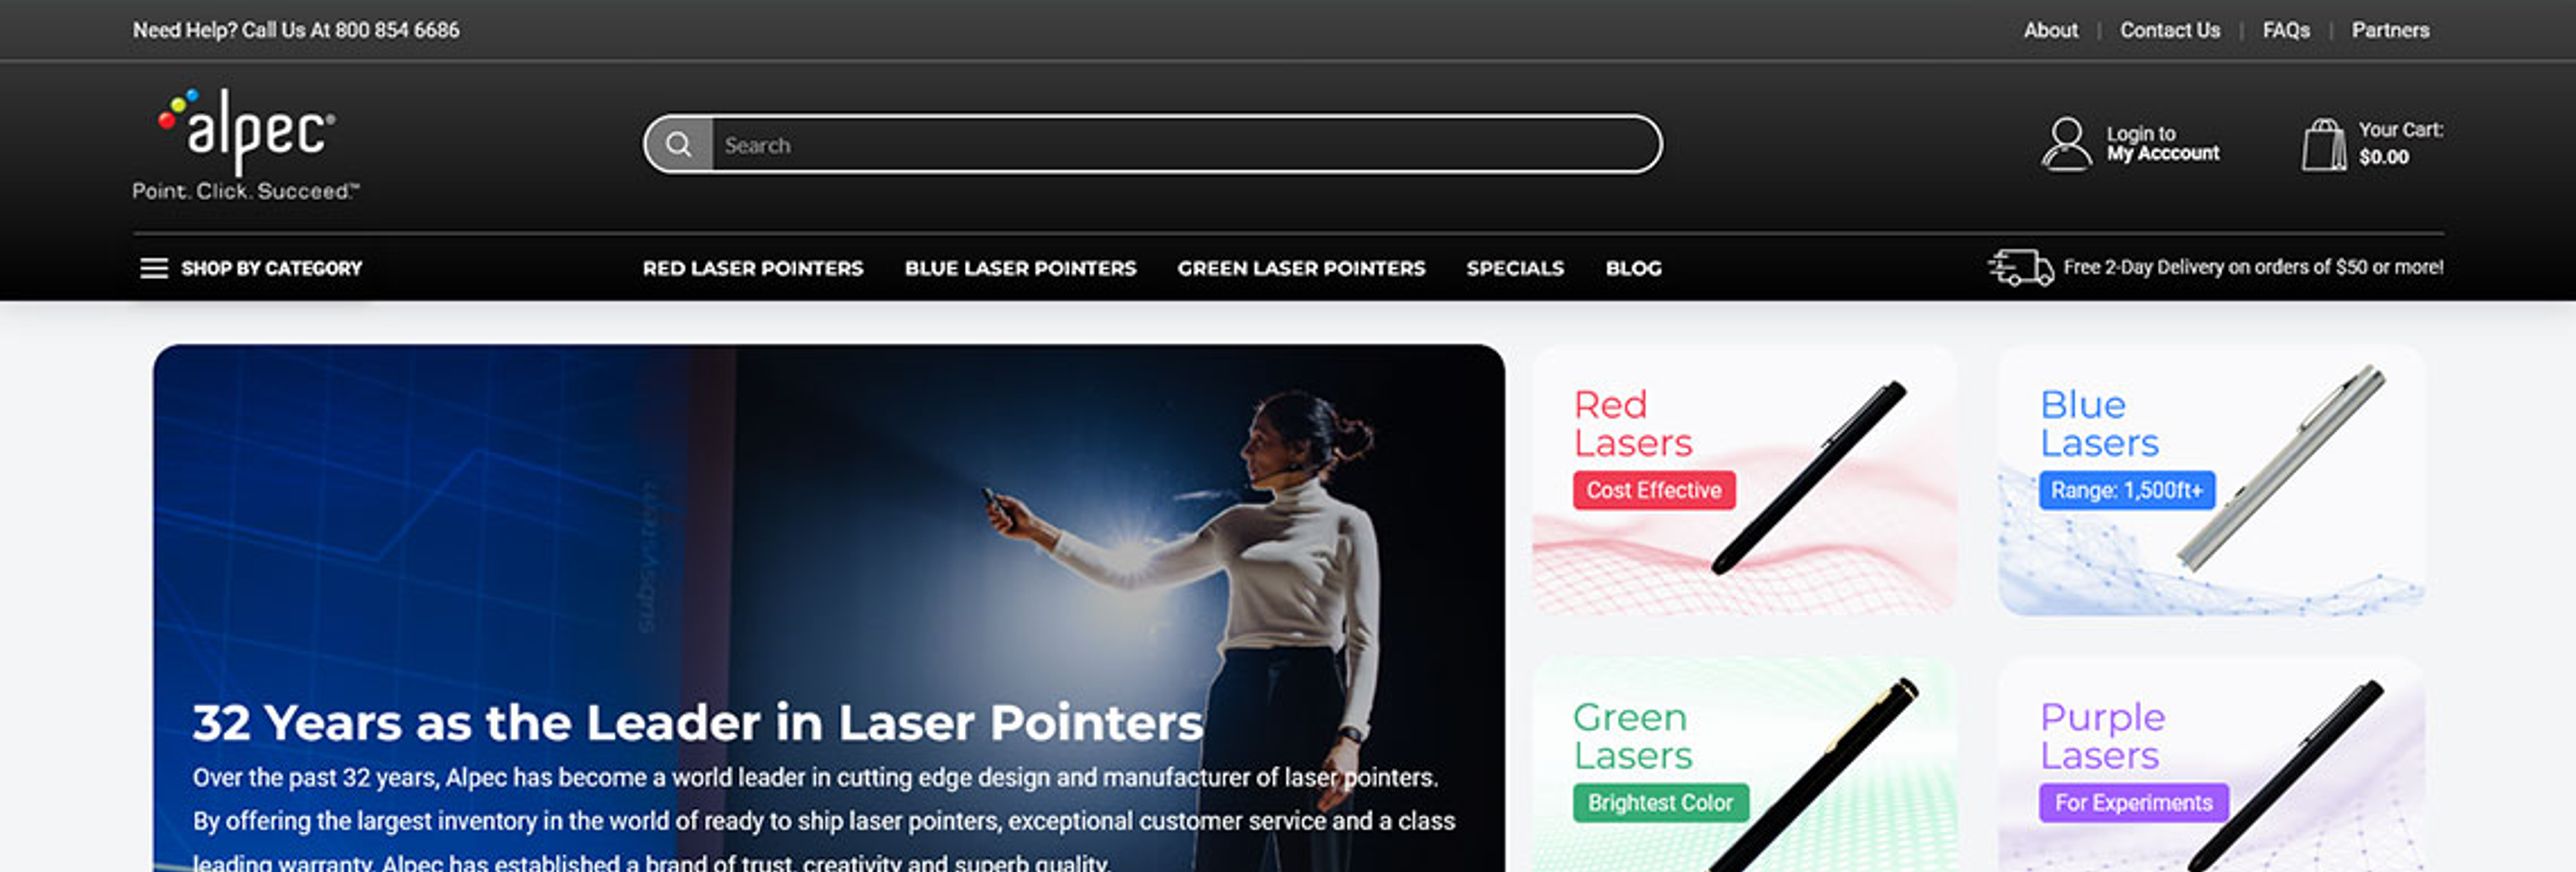 Alpec's eCommerce website design project